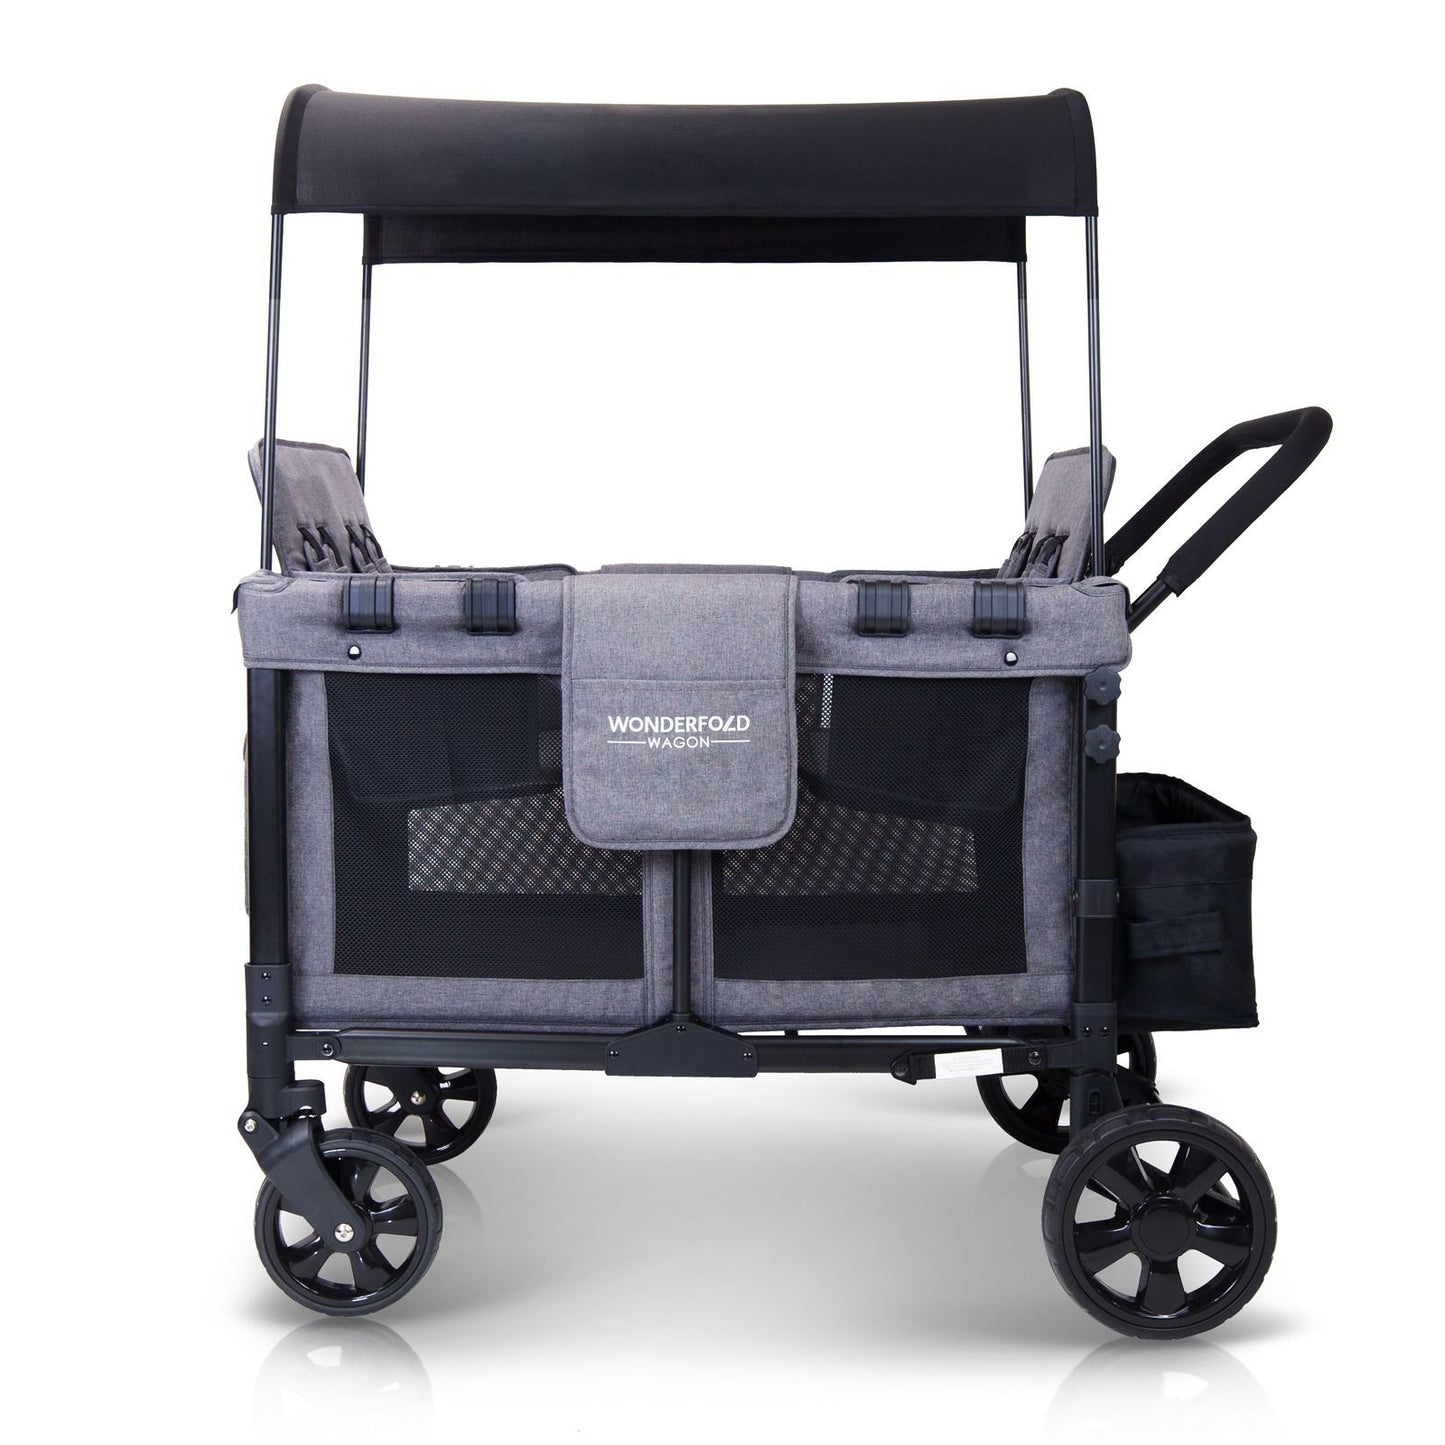 W4 Multi-Function 4-Passenger Quad Stroller Wagon